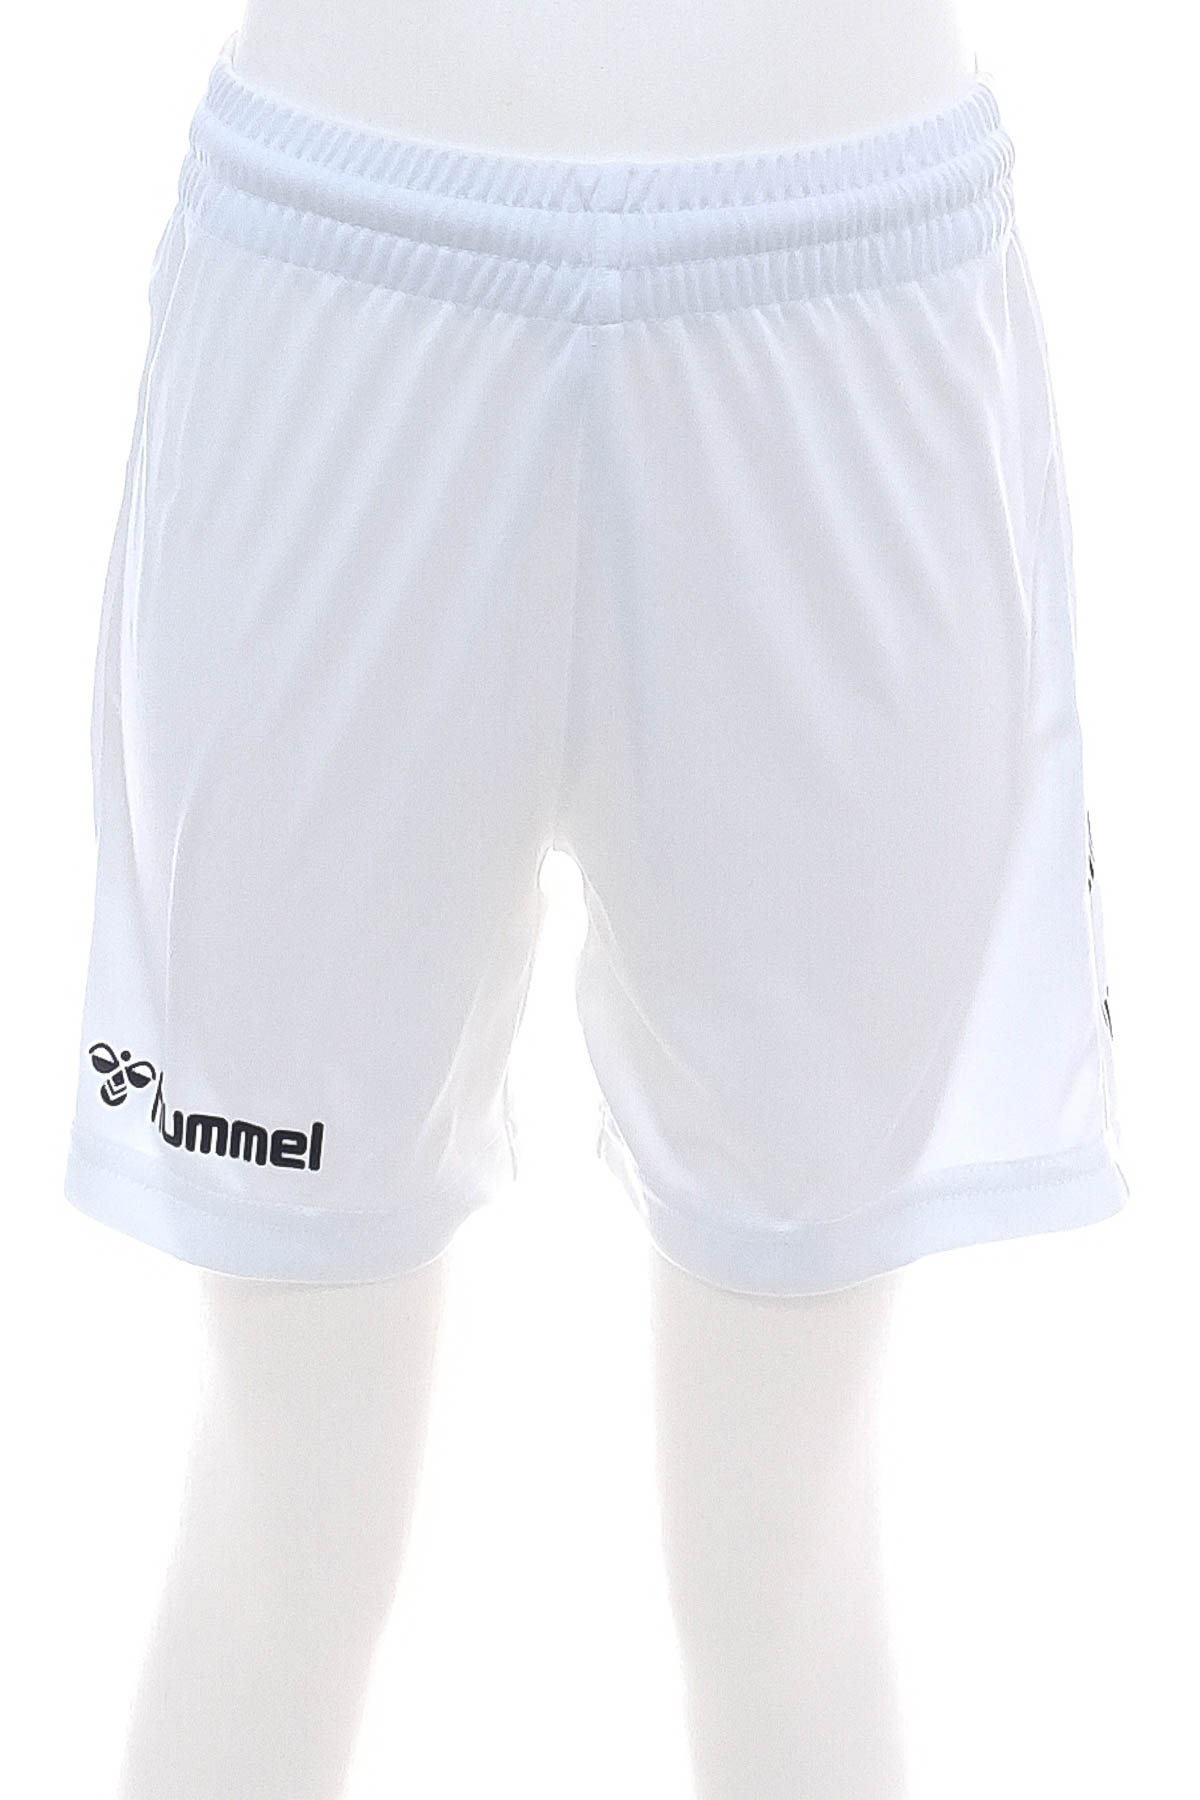 Shorts for boys - Hummel - 0